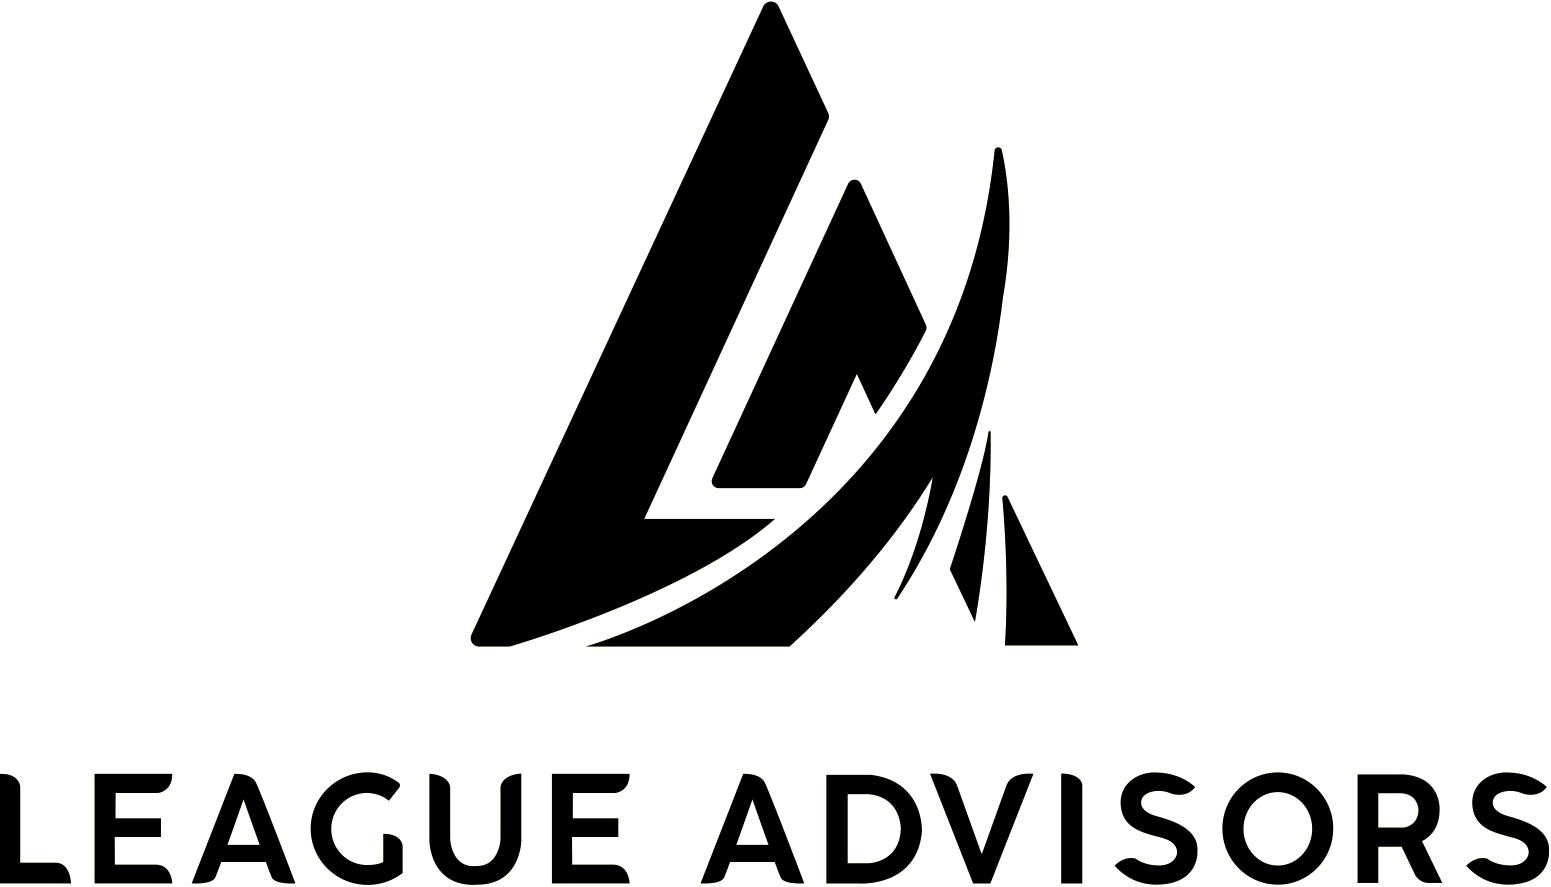 League Advisors company logo